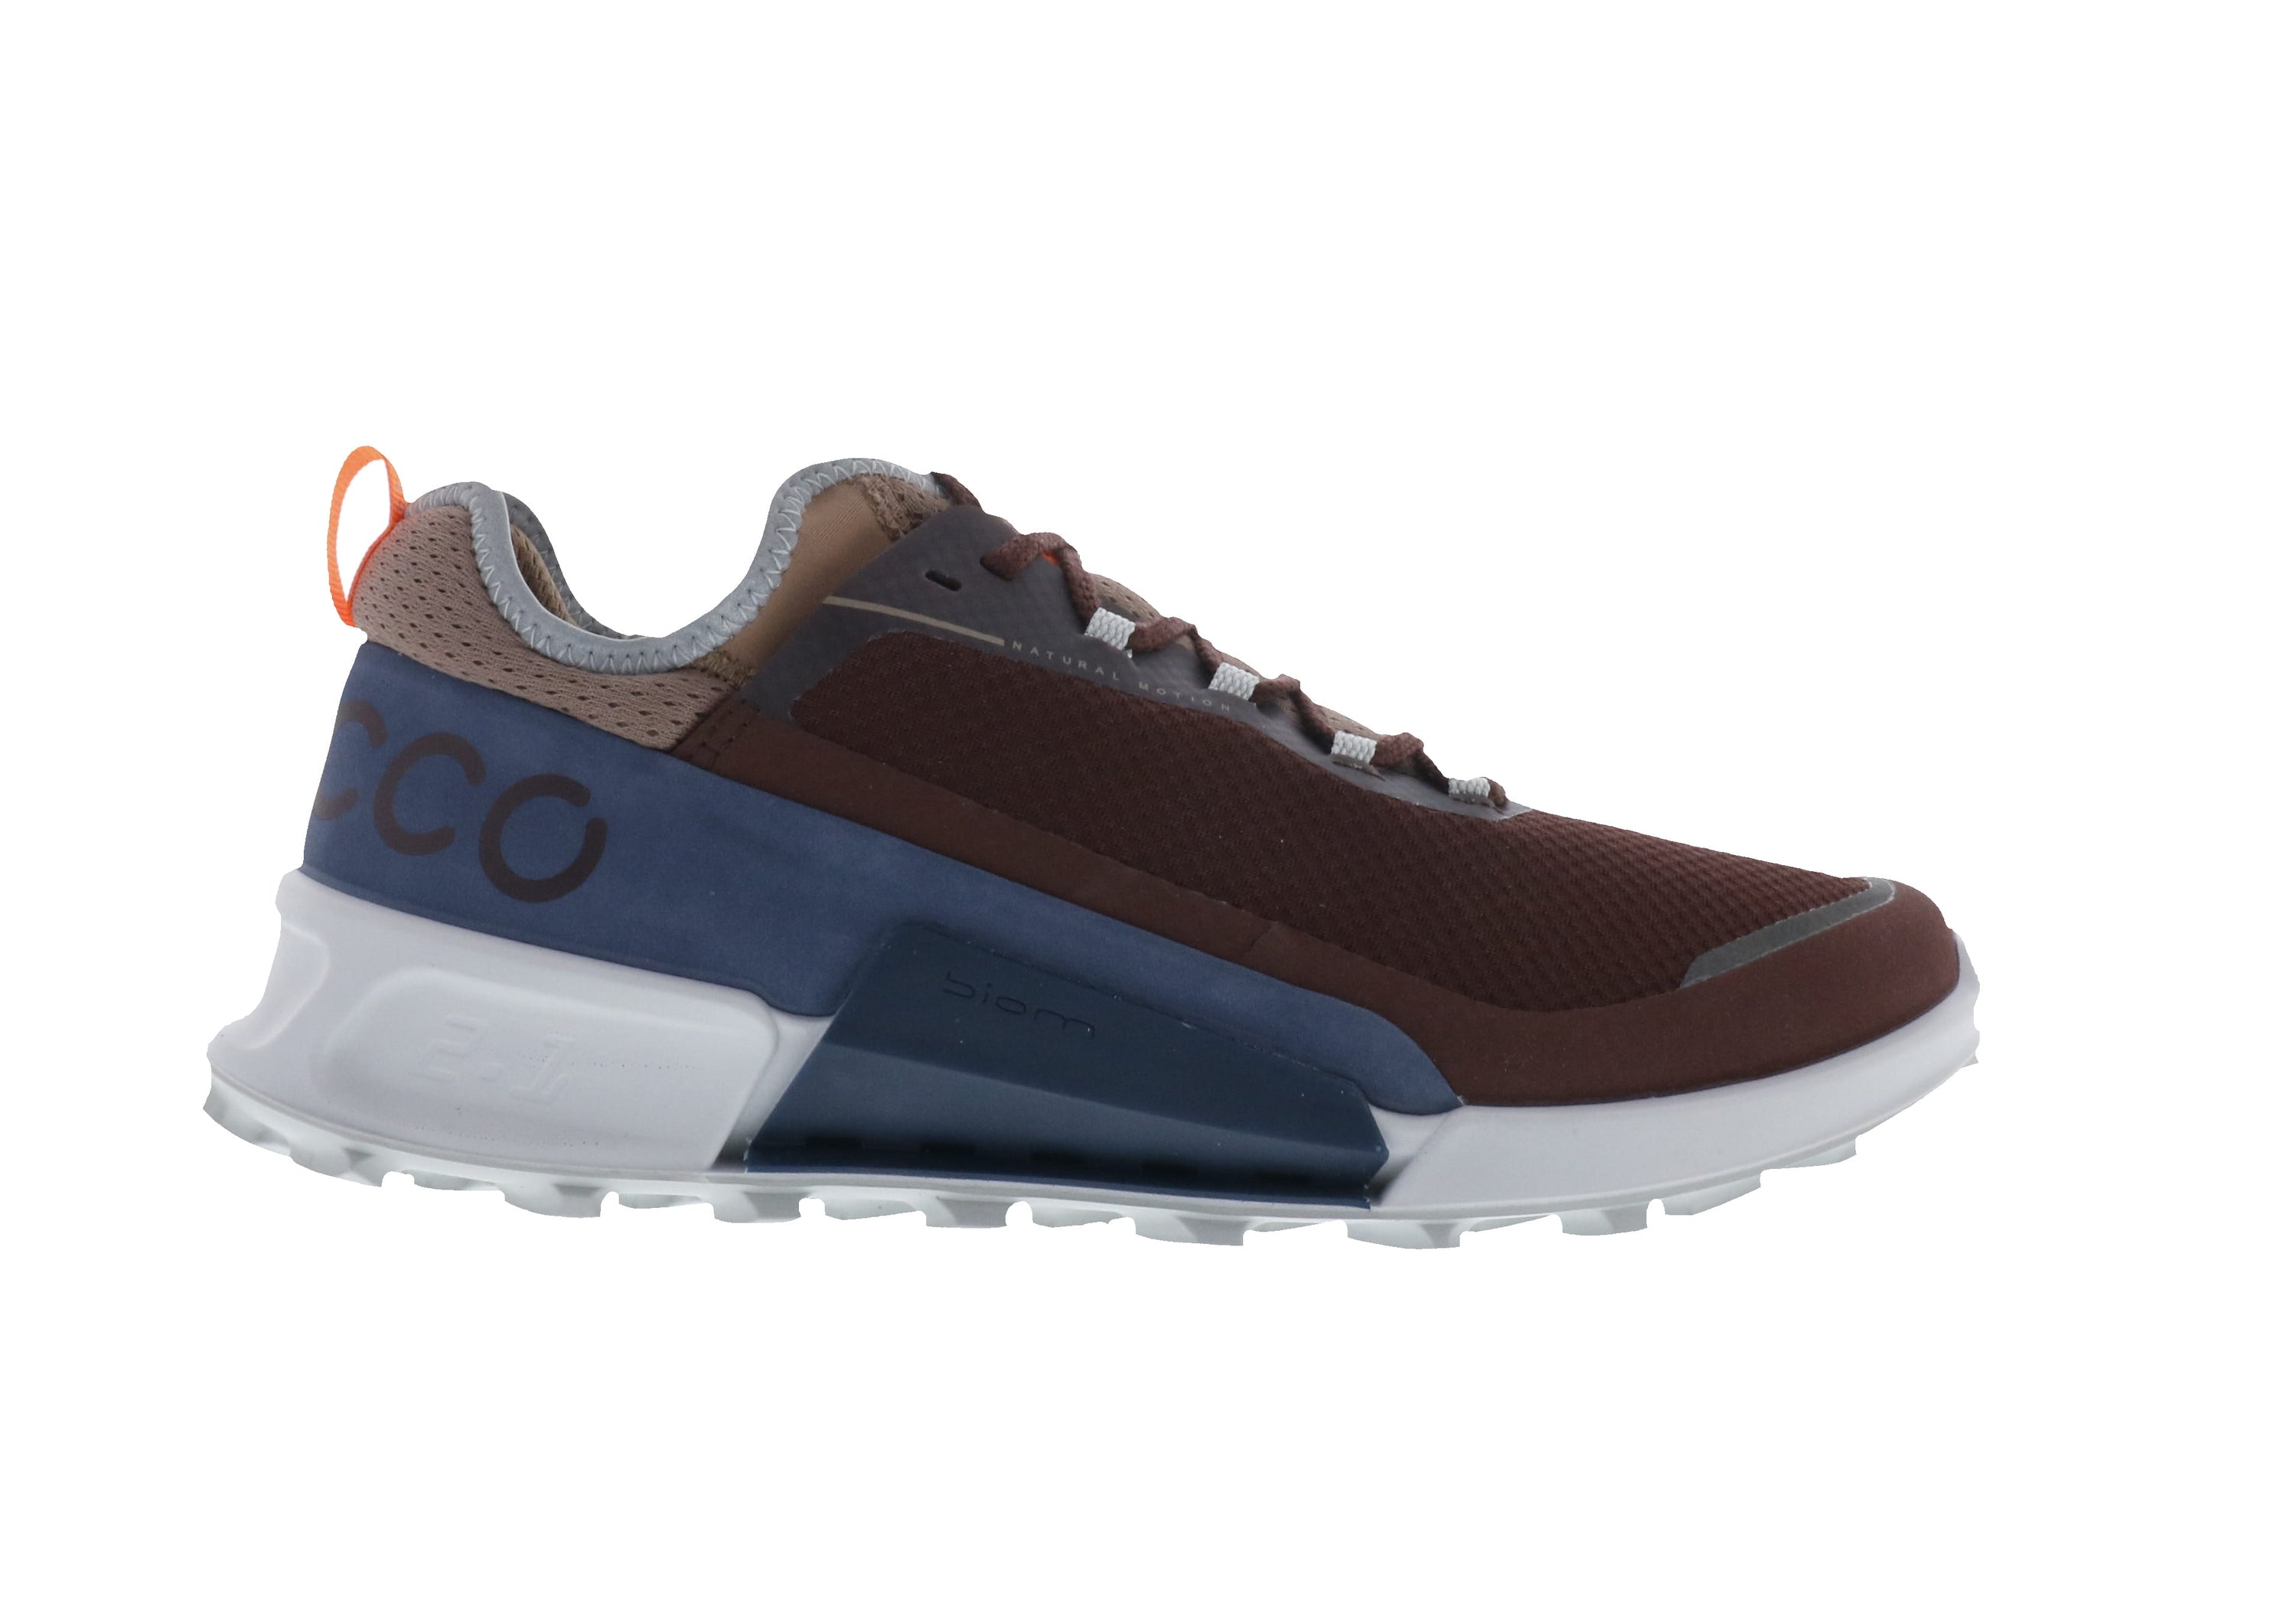 ECCO Biom 2.1X Country Sneaker (Men's) - Chocolate